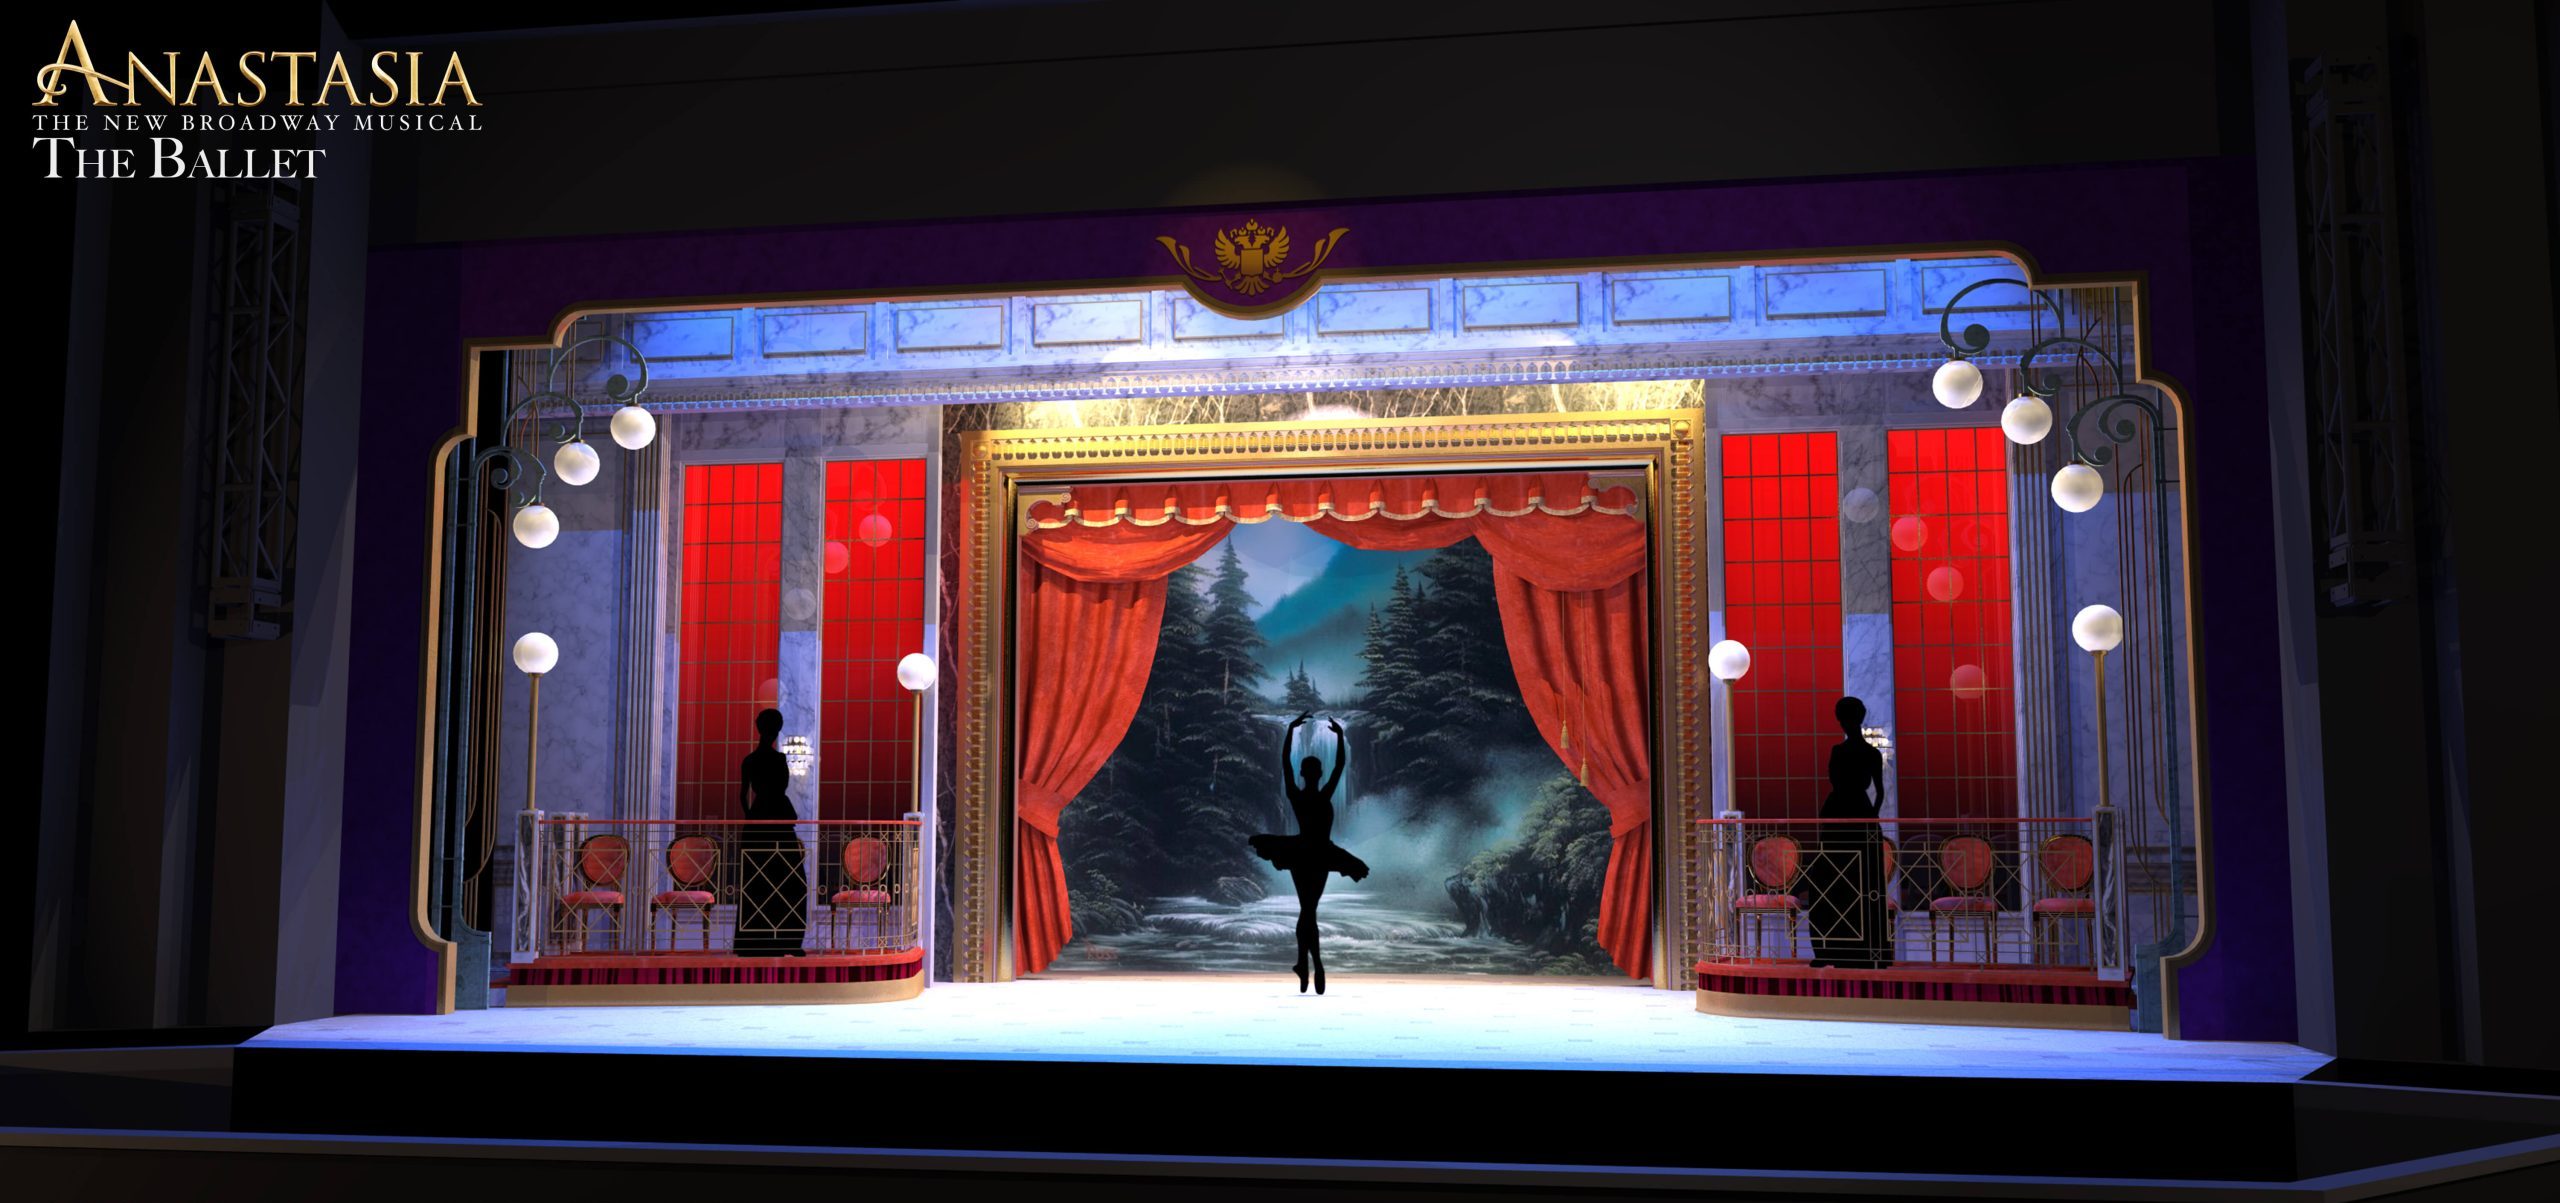 Anastasia scenery rental - the ballet musical scene - Front Row Theatrical Rental